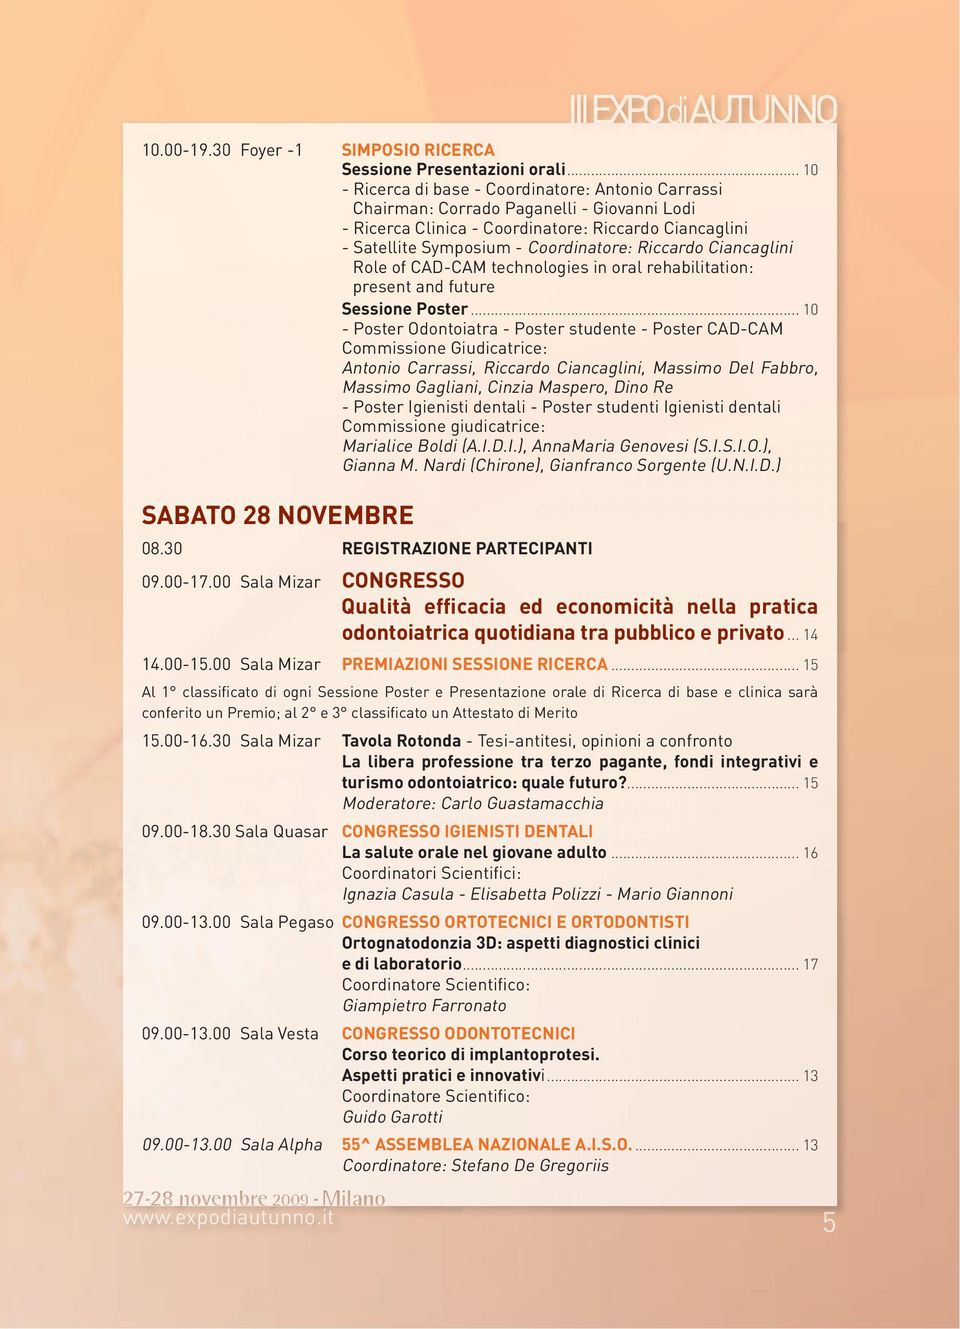 Riccardo Ciancaglini Role of CAD-CAM technologies in oral rehabilitation: present and future Sessione Poster.